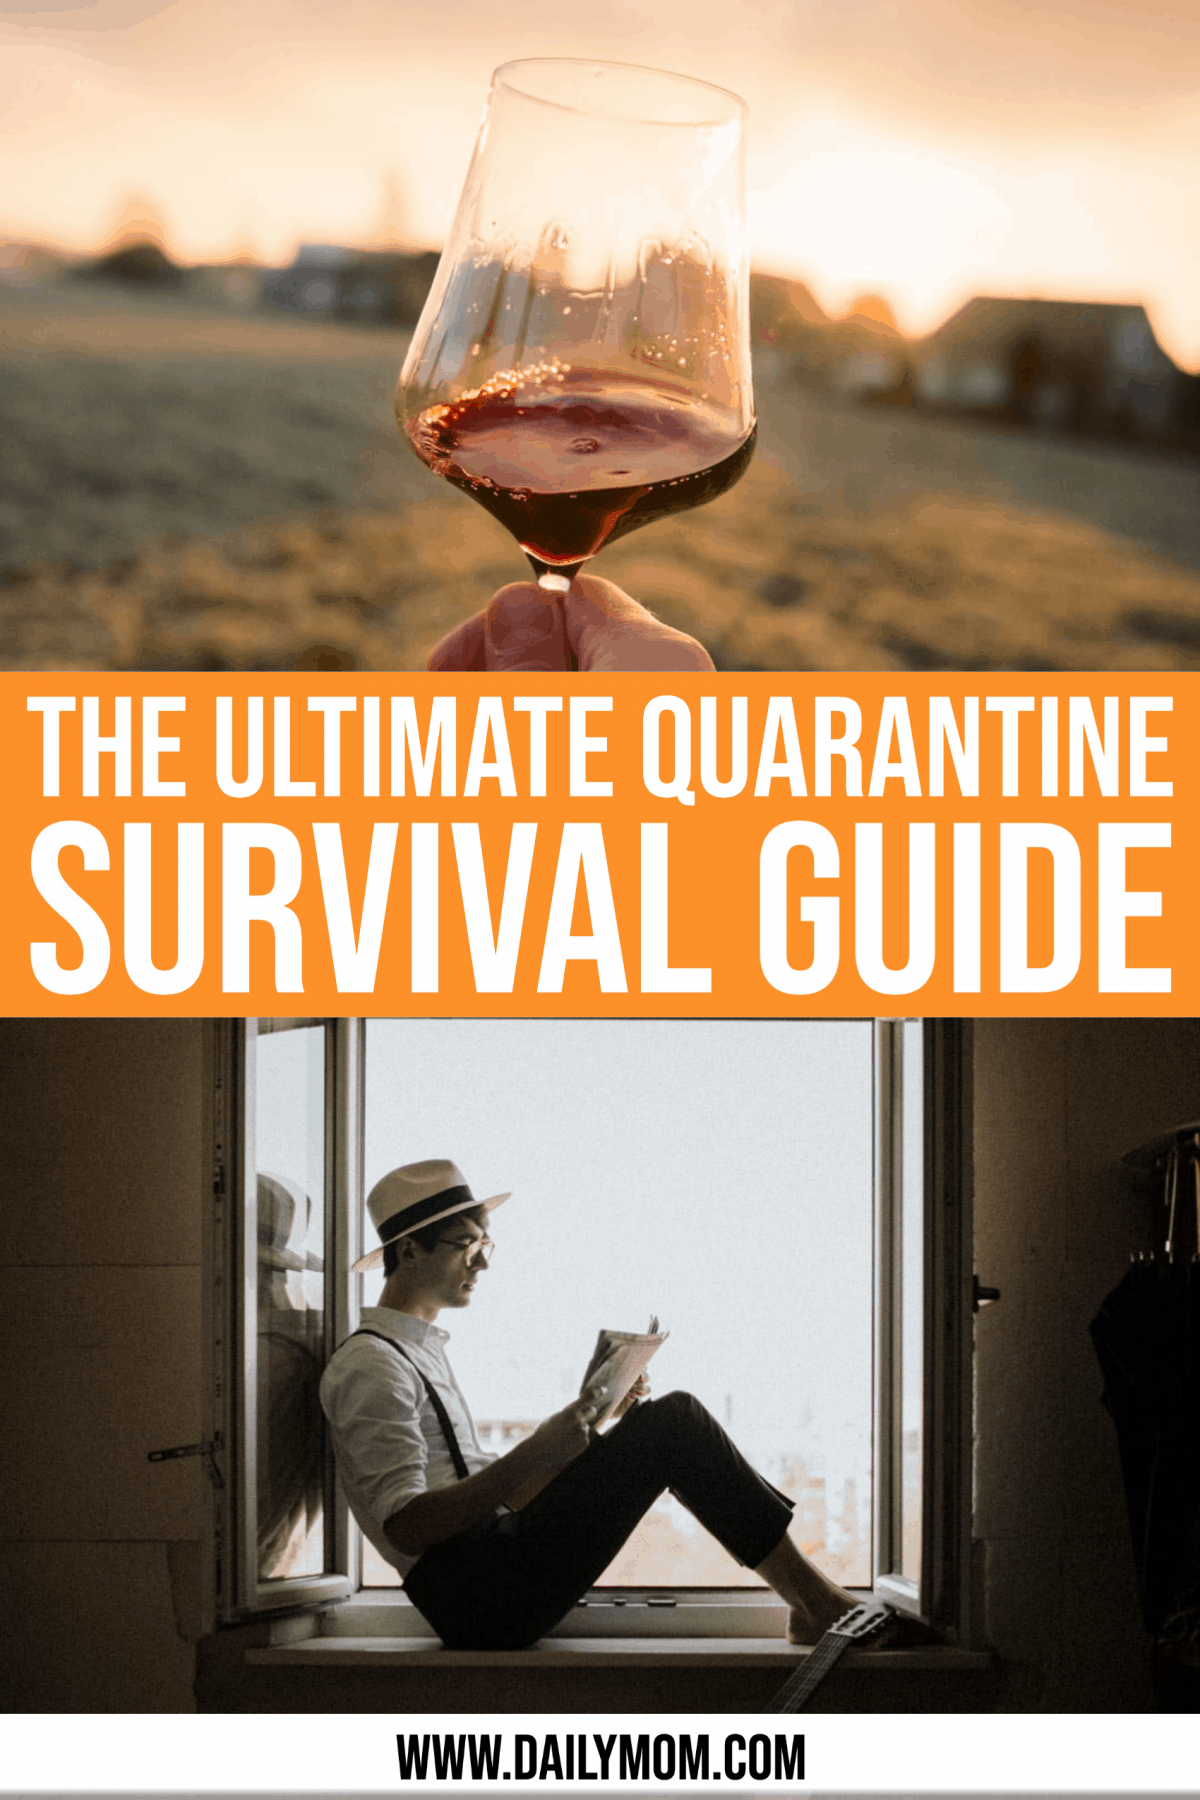 The Ultimate Quarantine Survival Guide